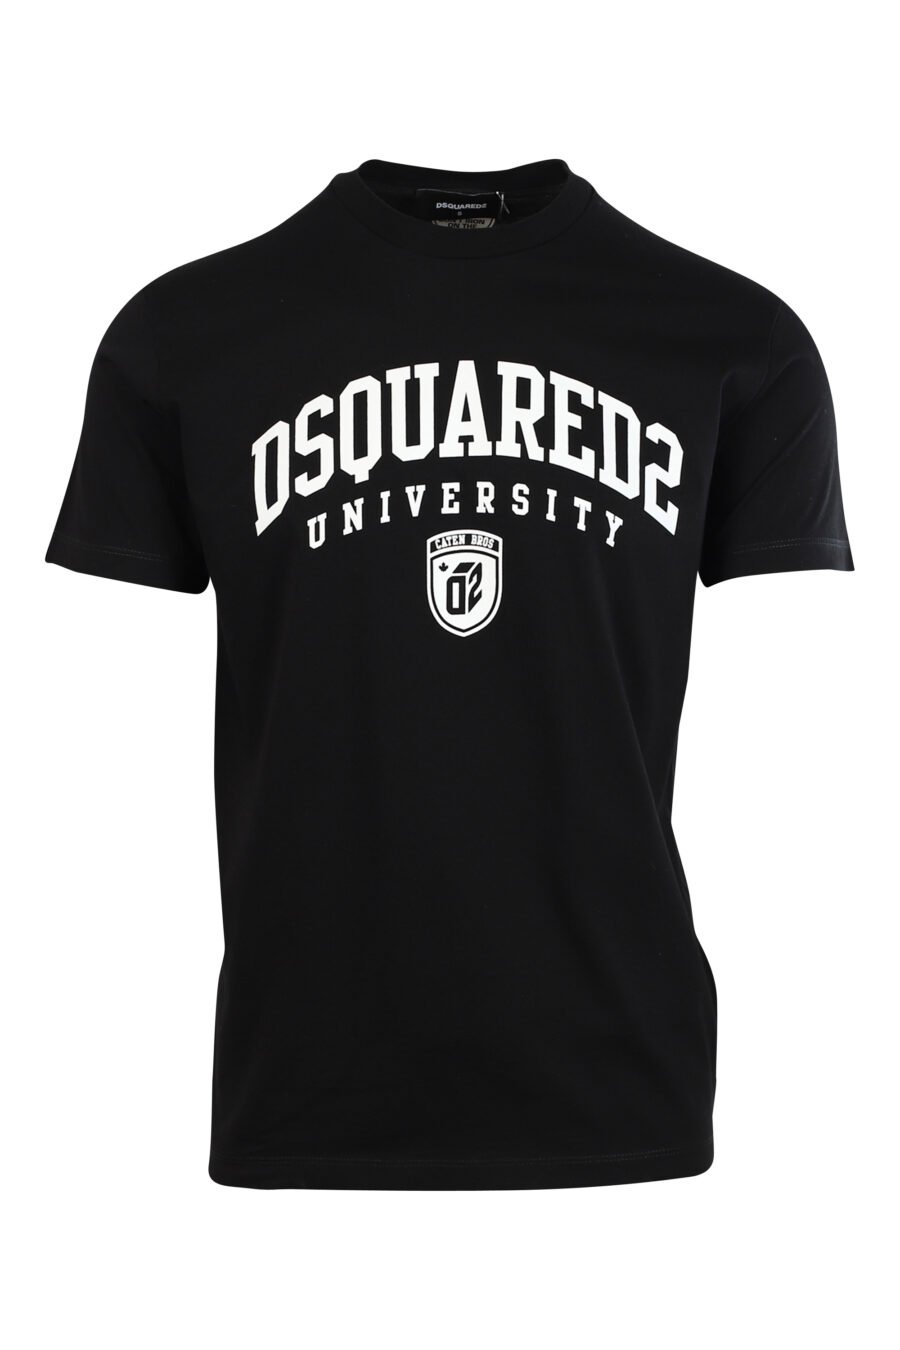 Schwarzes T-Shirt mit weißem "Uni"-Maxilogo - 8052134945810